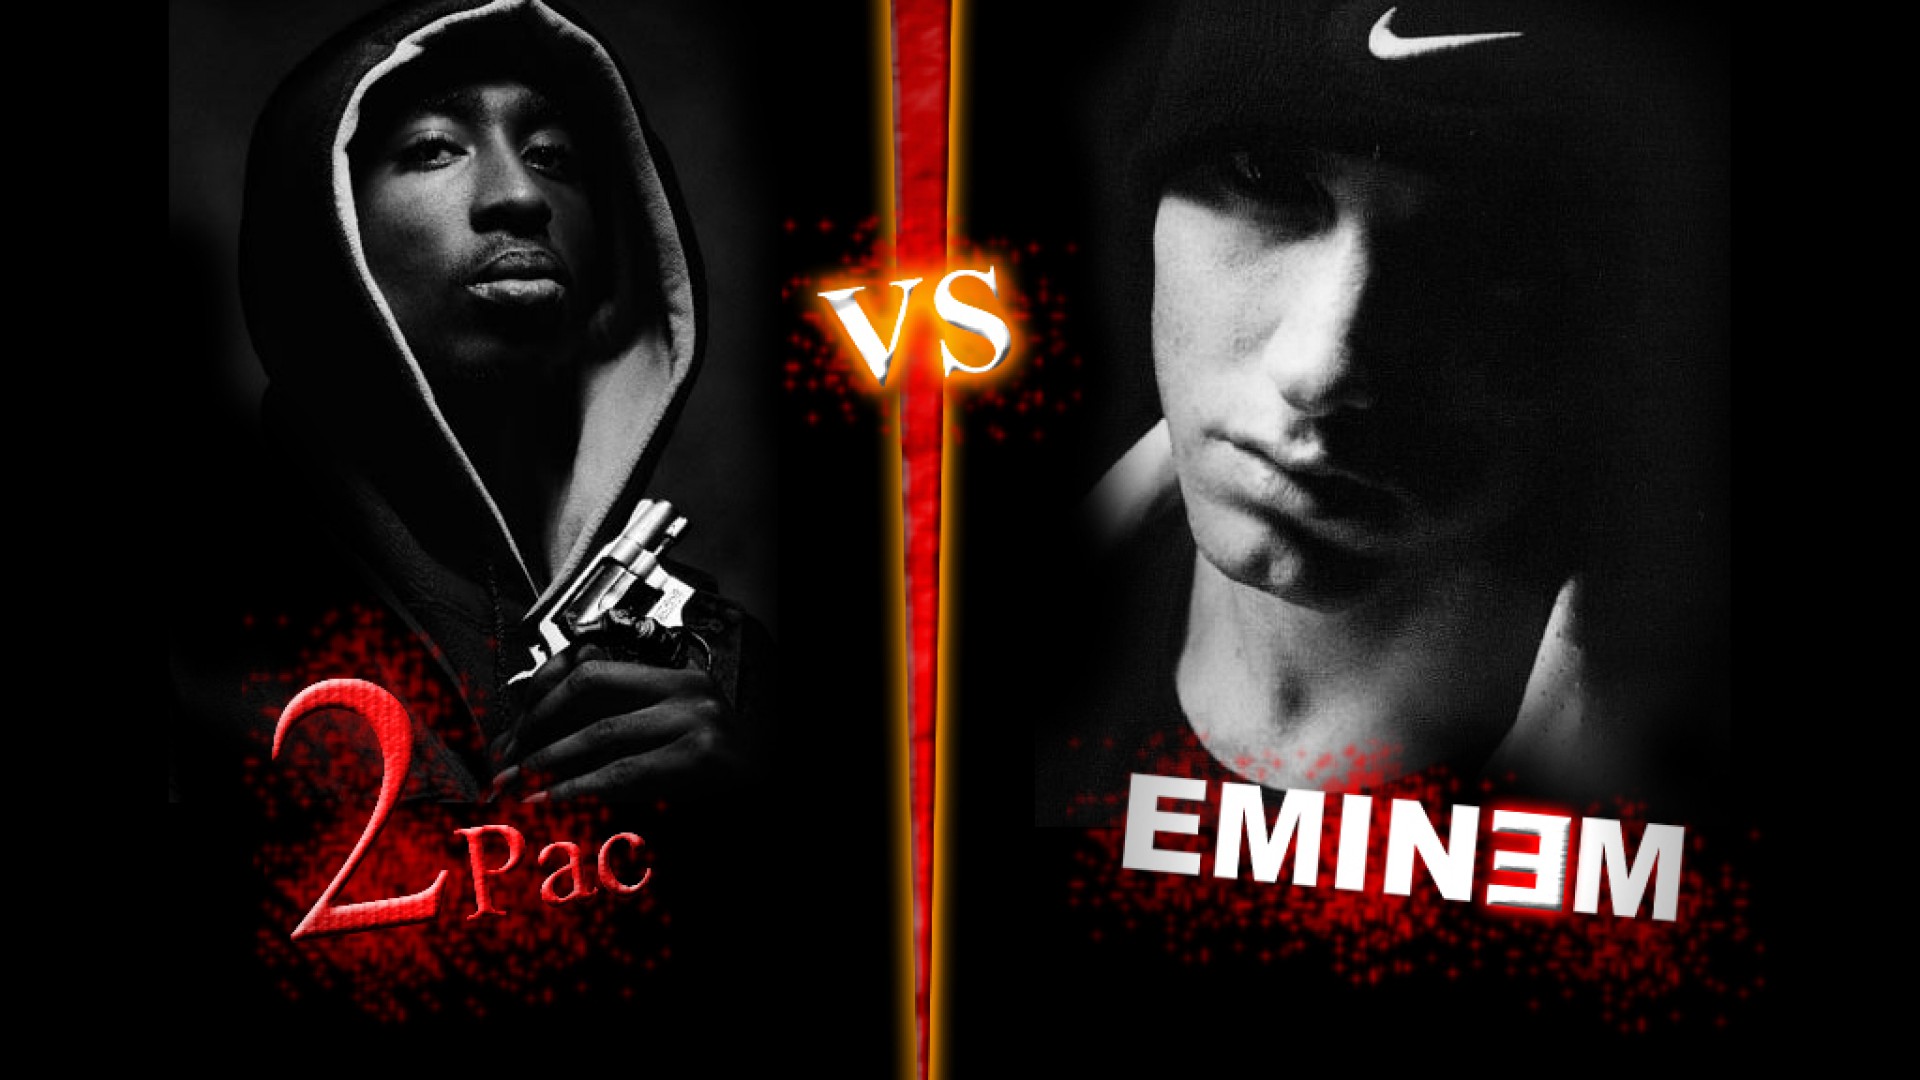 2pac Vs Eminem Wallpaper HD